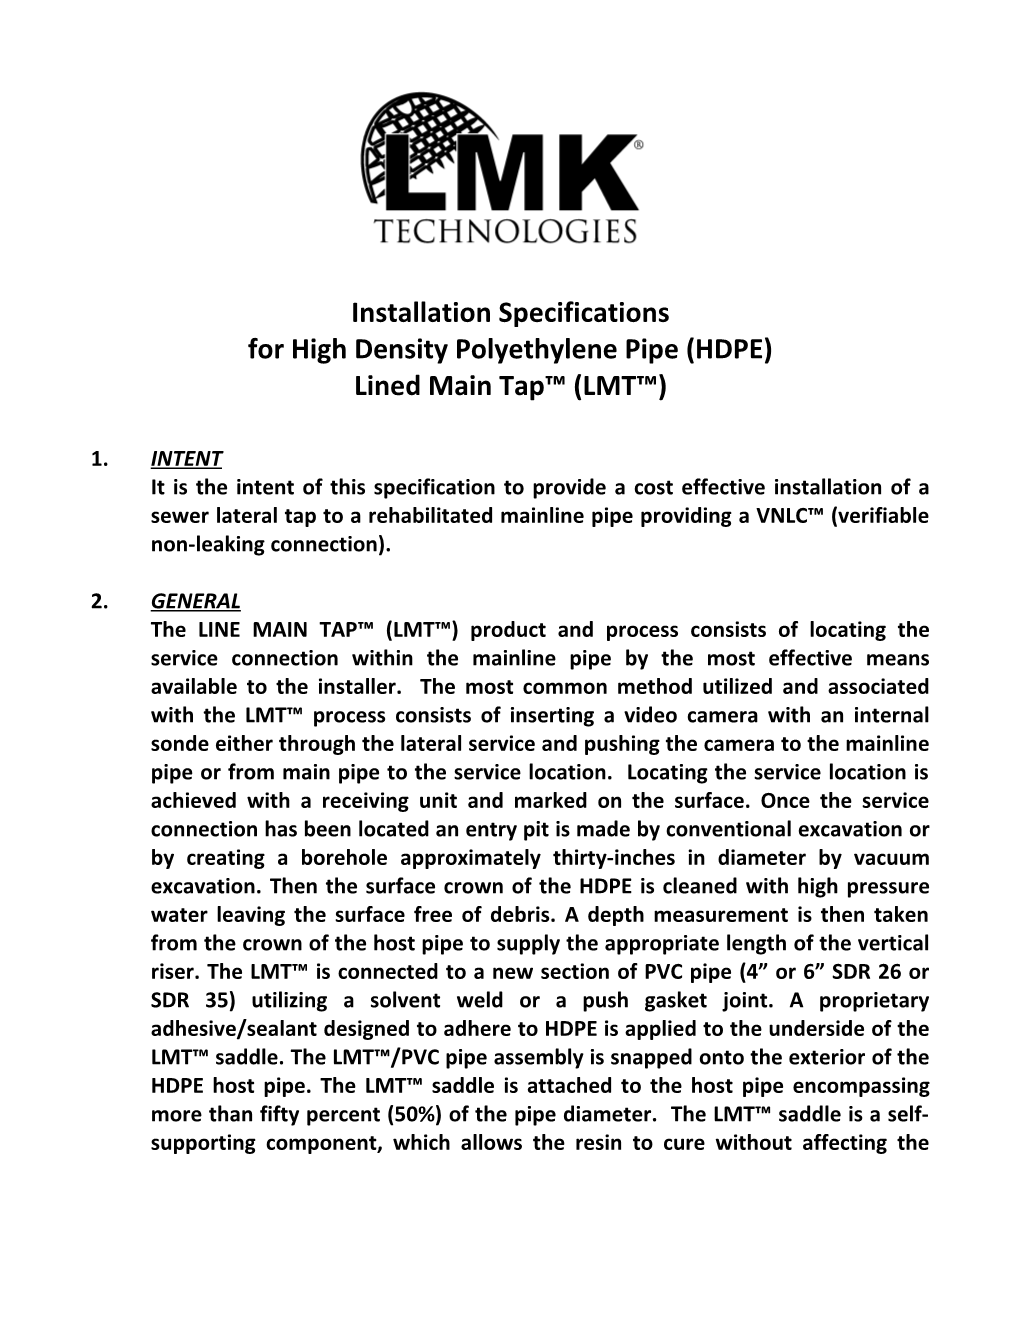 For High Density Polyethylene Pipe (HDPE)